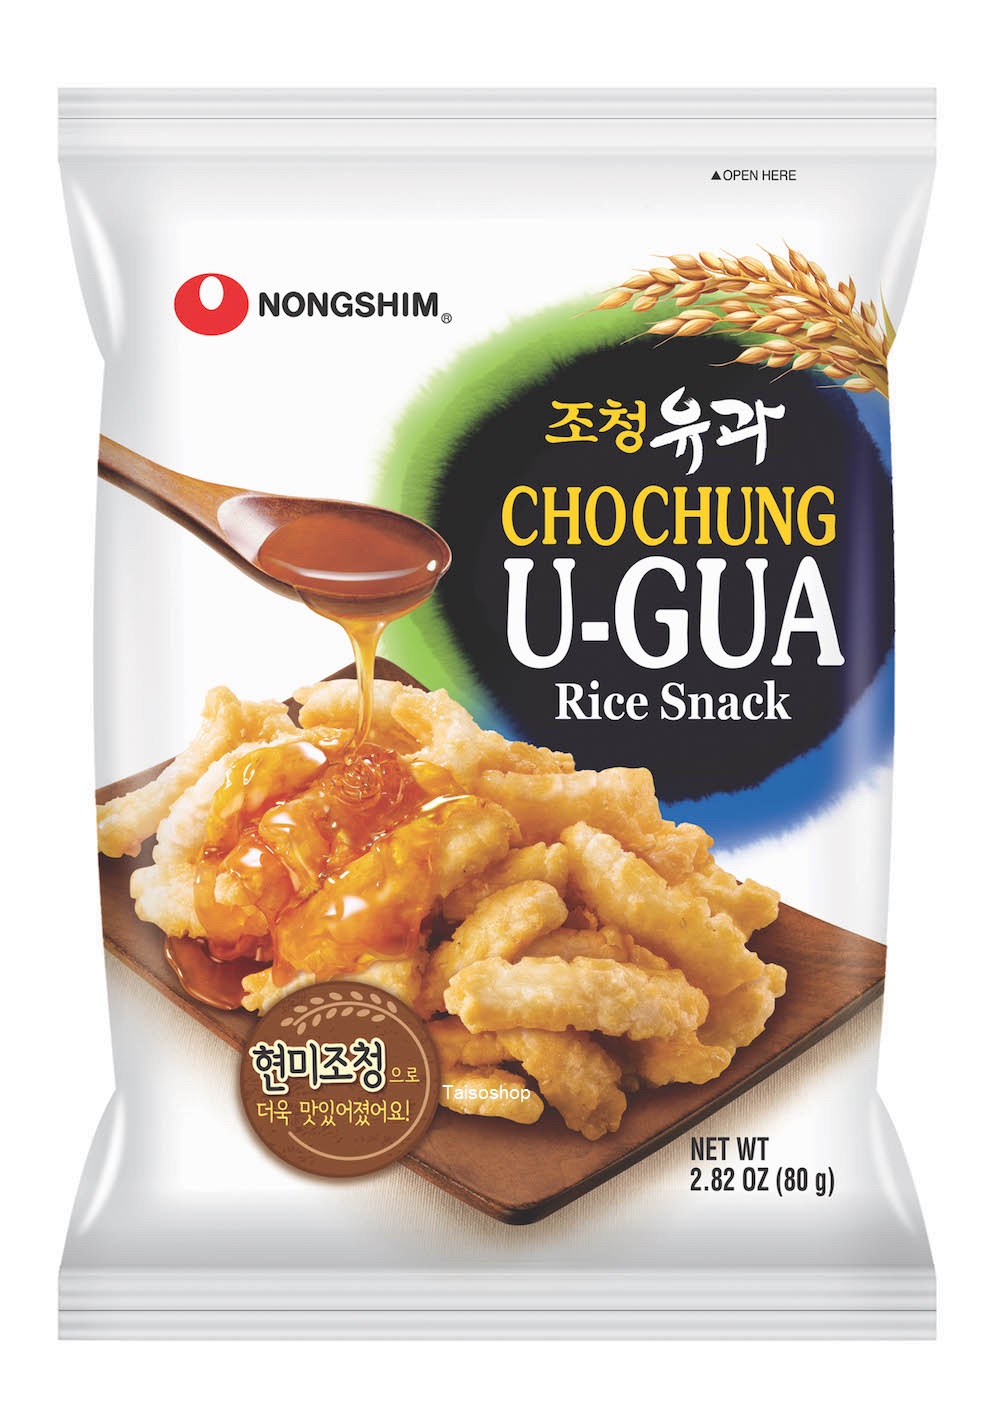 Snack Chochung U Gua Rice Snack 80g Korea Nongshim Taiso Shop